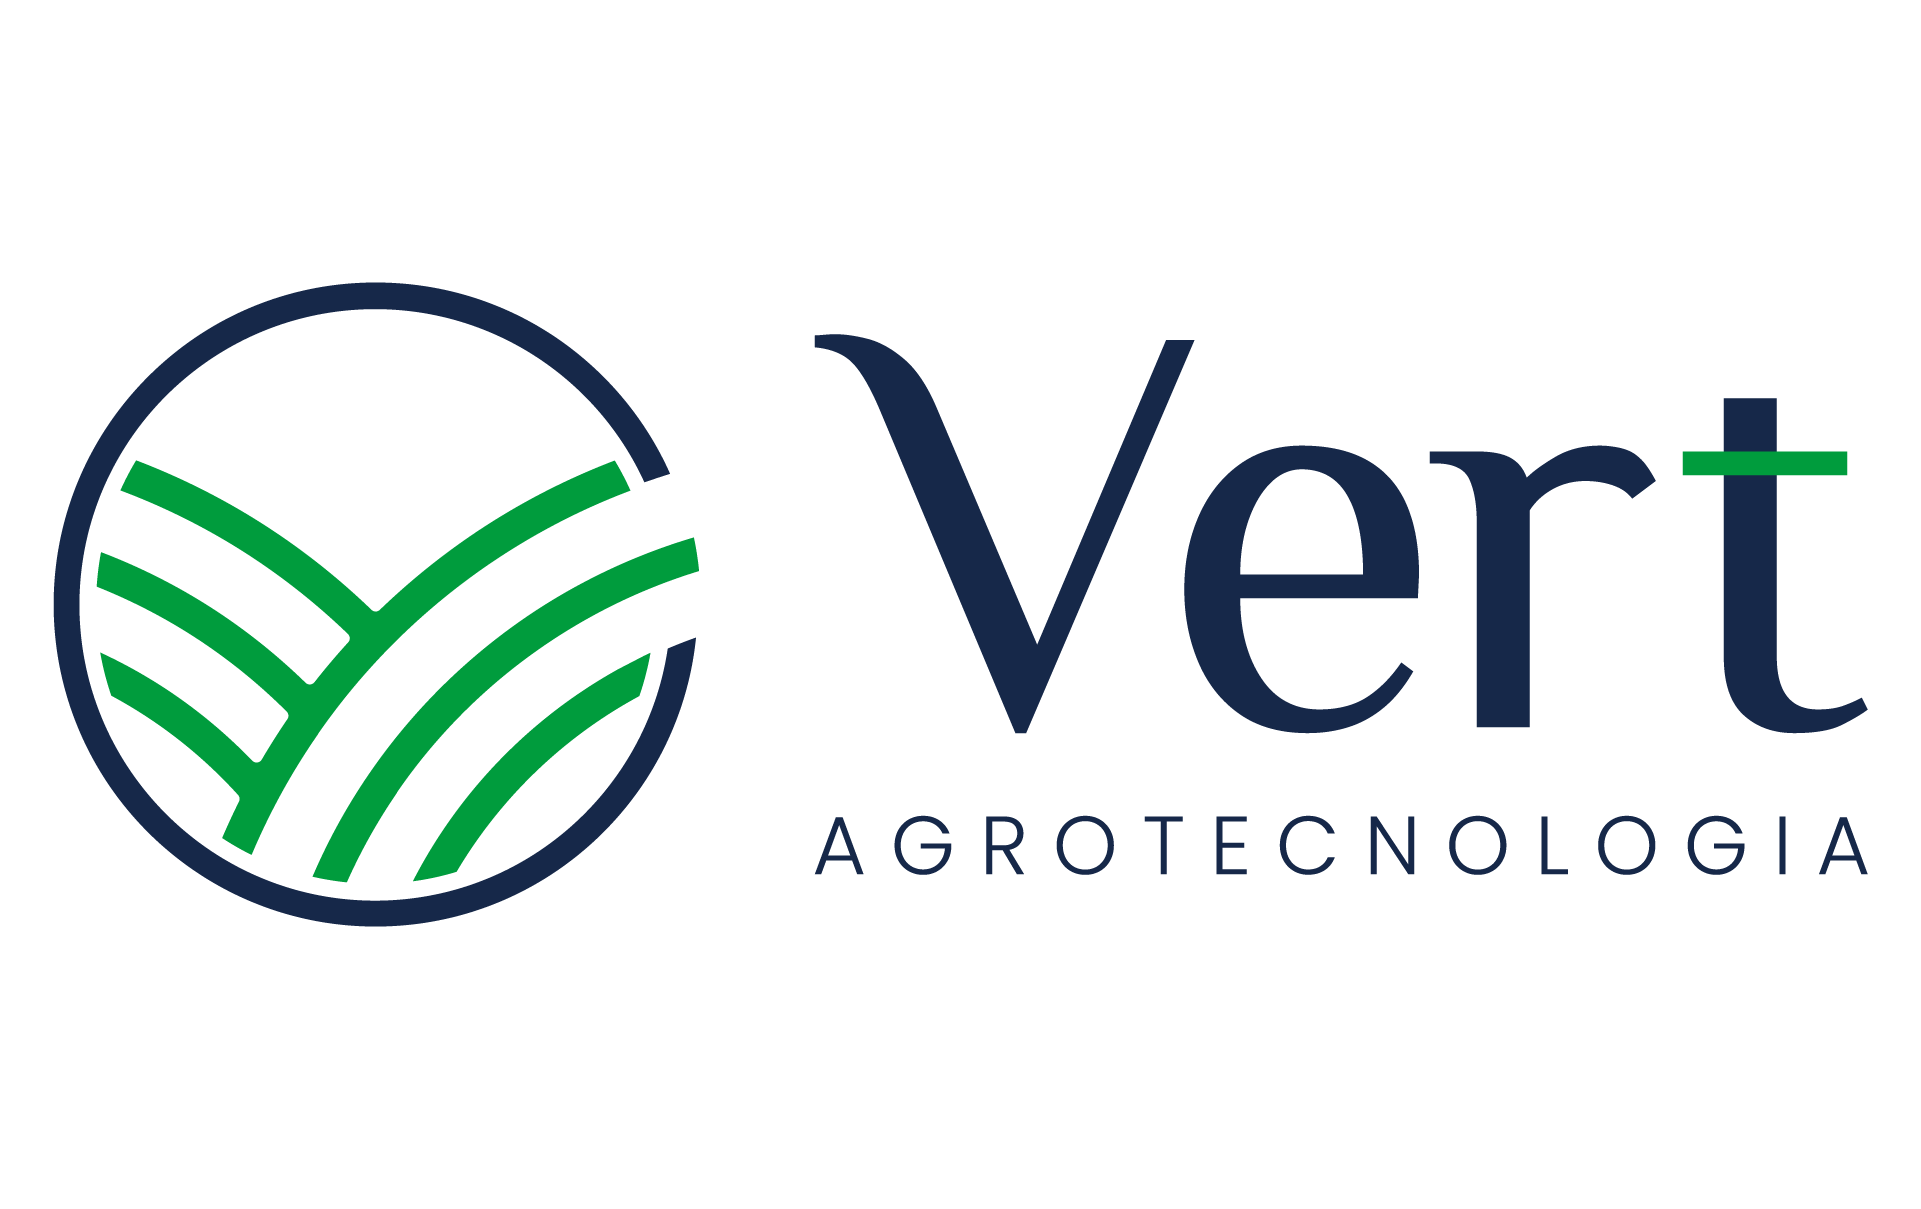 Vert Agrotecnologia